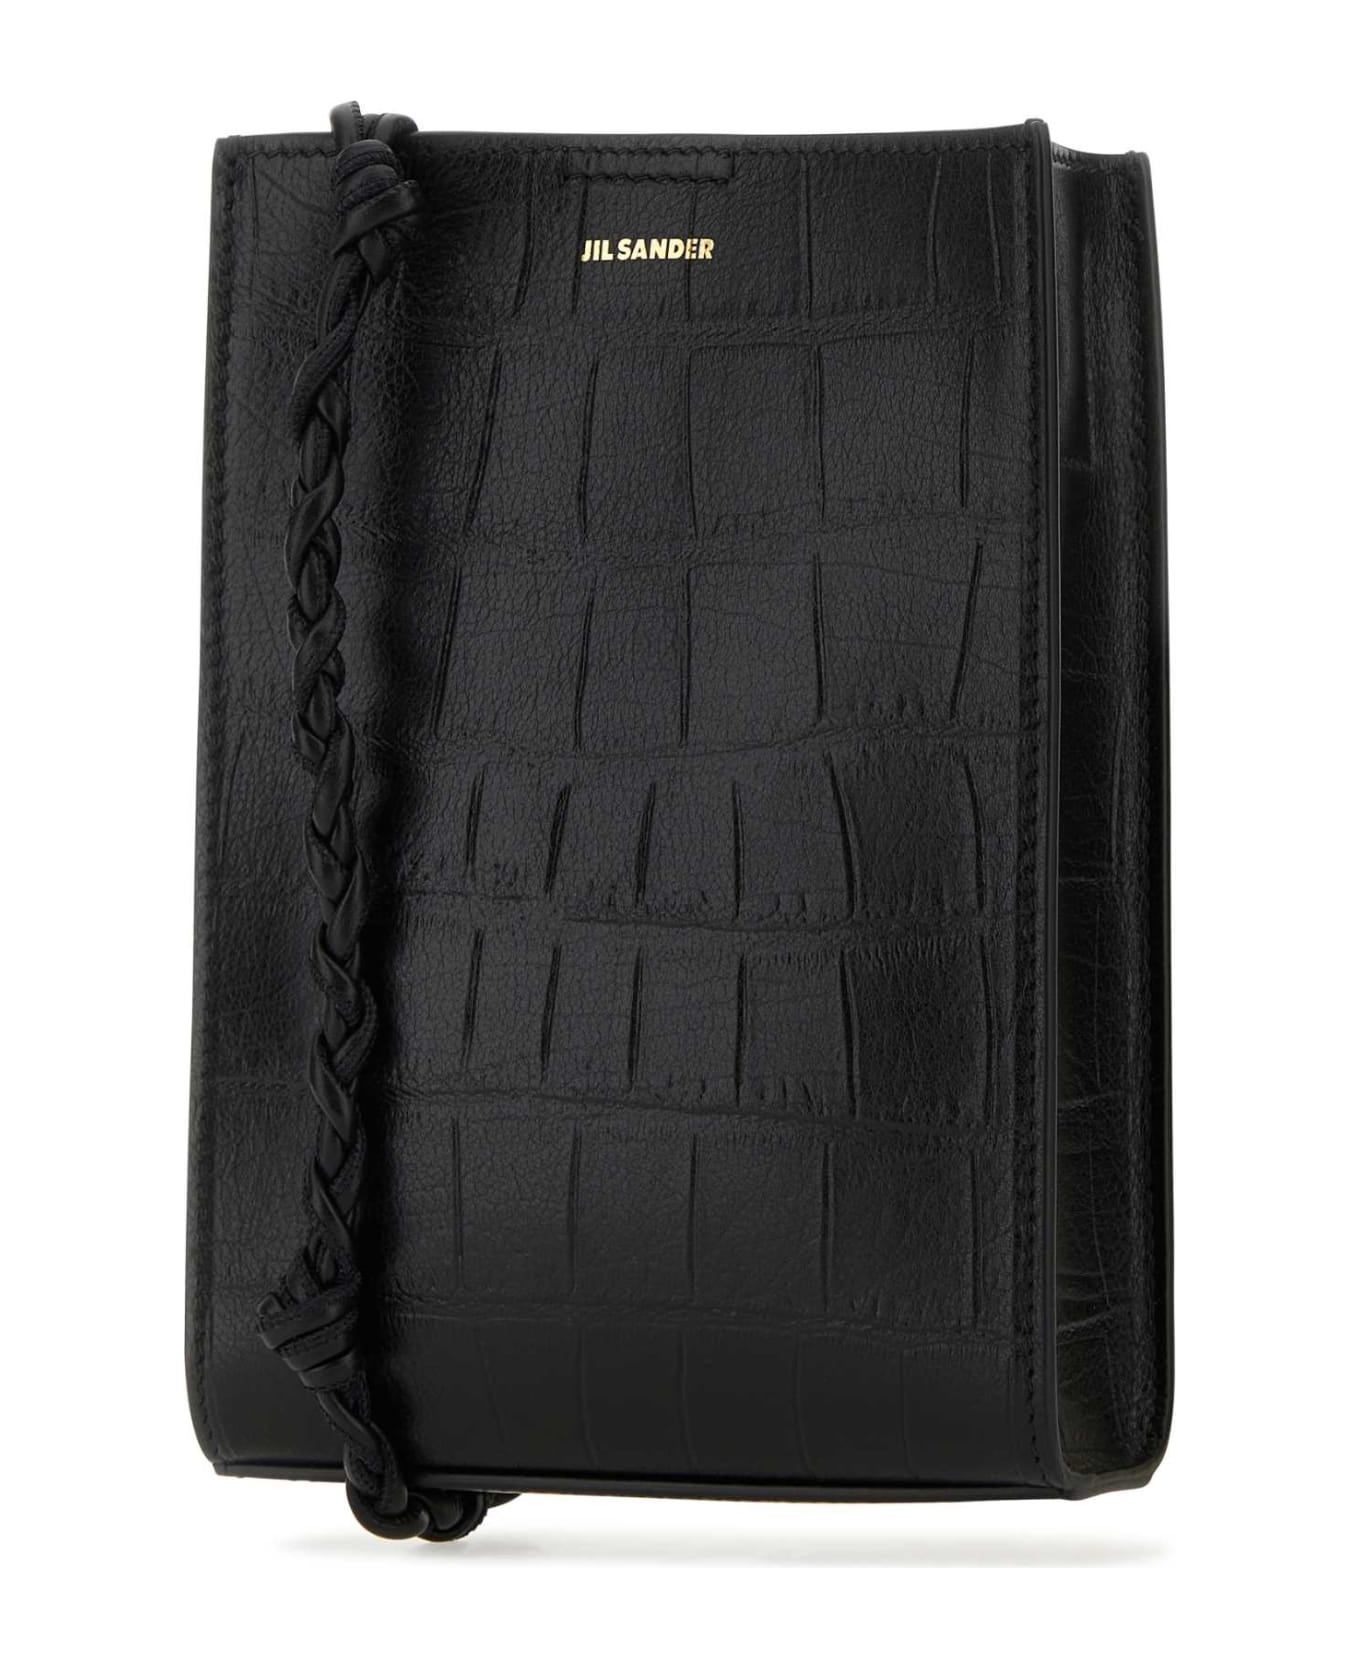 Jil Sander Black Leather Small Tangle Shoulder Bag - 001 ショルダーバッグ